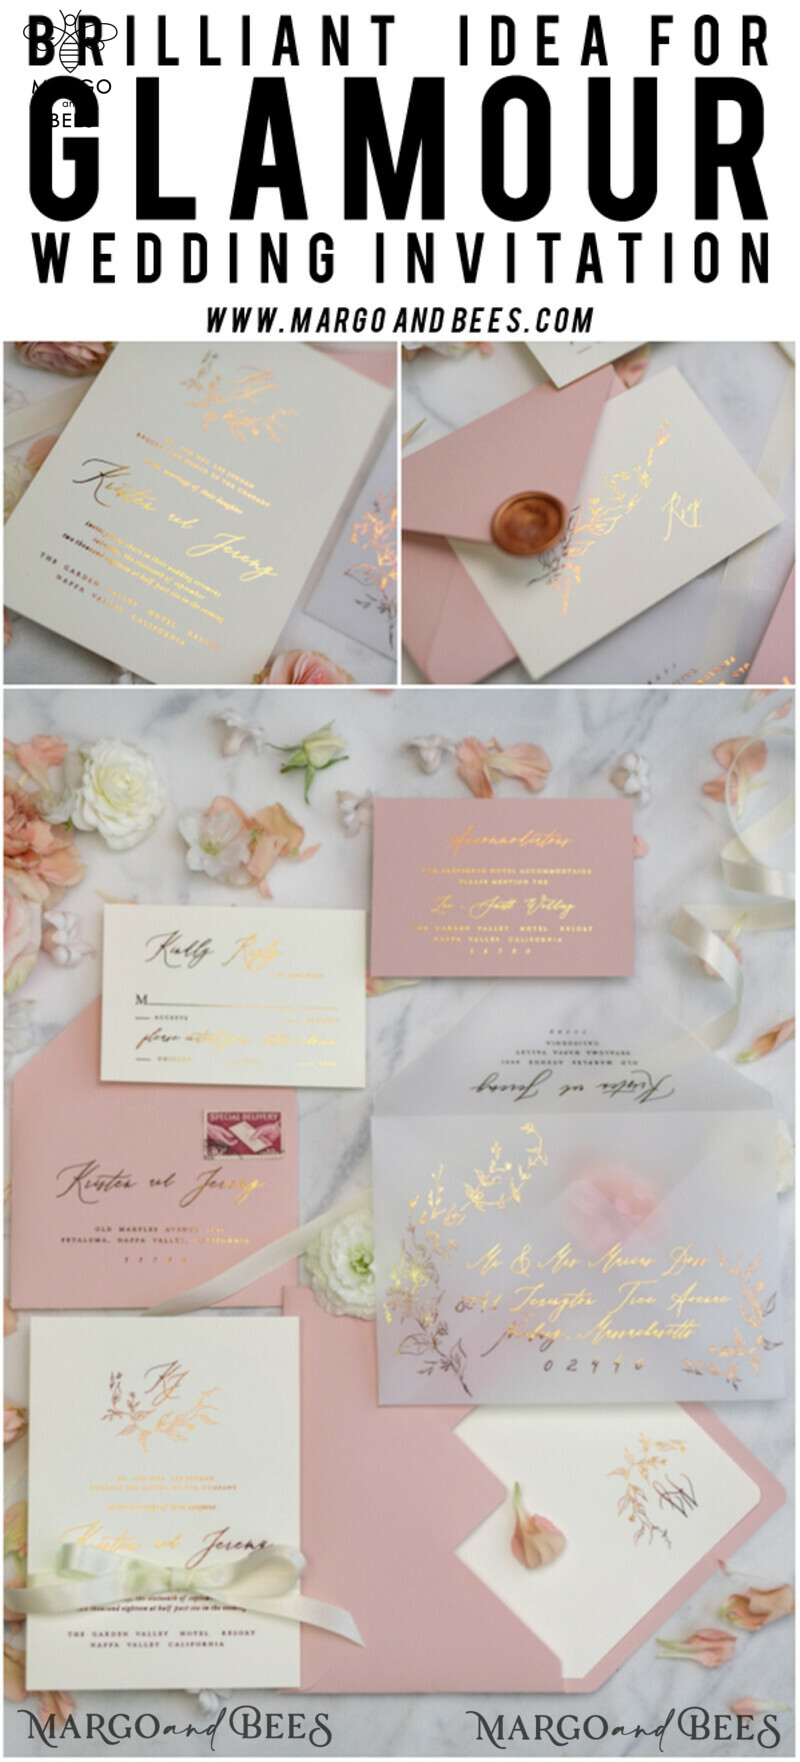 Bespoke Vellum Wedding Invitation Suite: Romantic Blush Pink and Glamour Gold Foil for Elegant Golden Wedding Invites-42